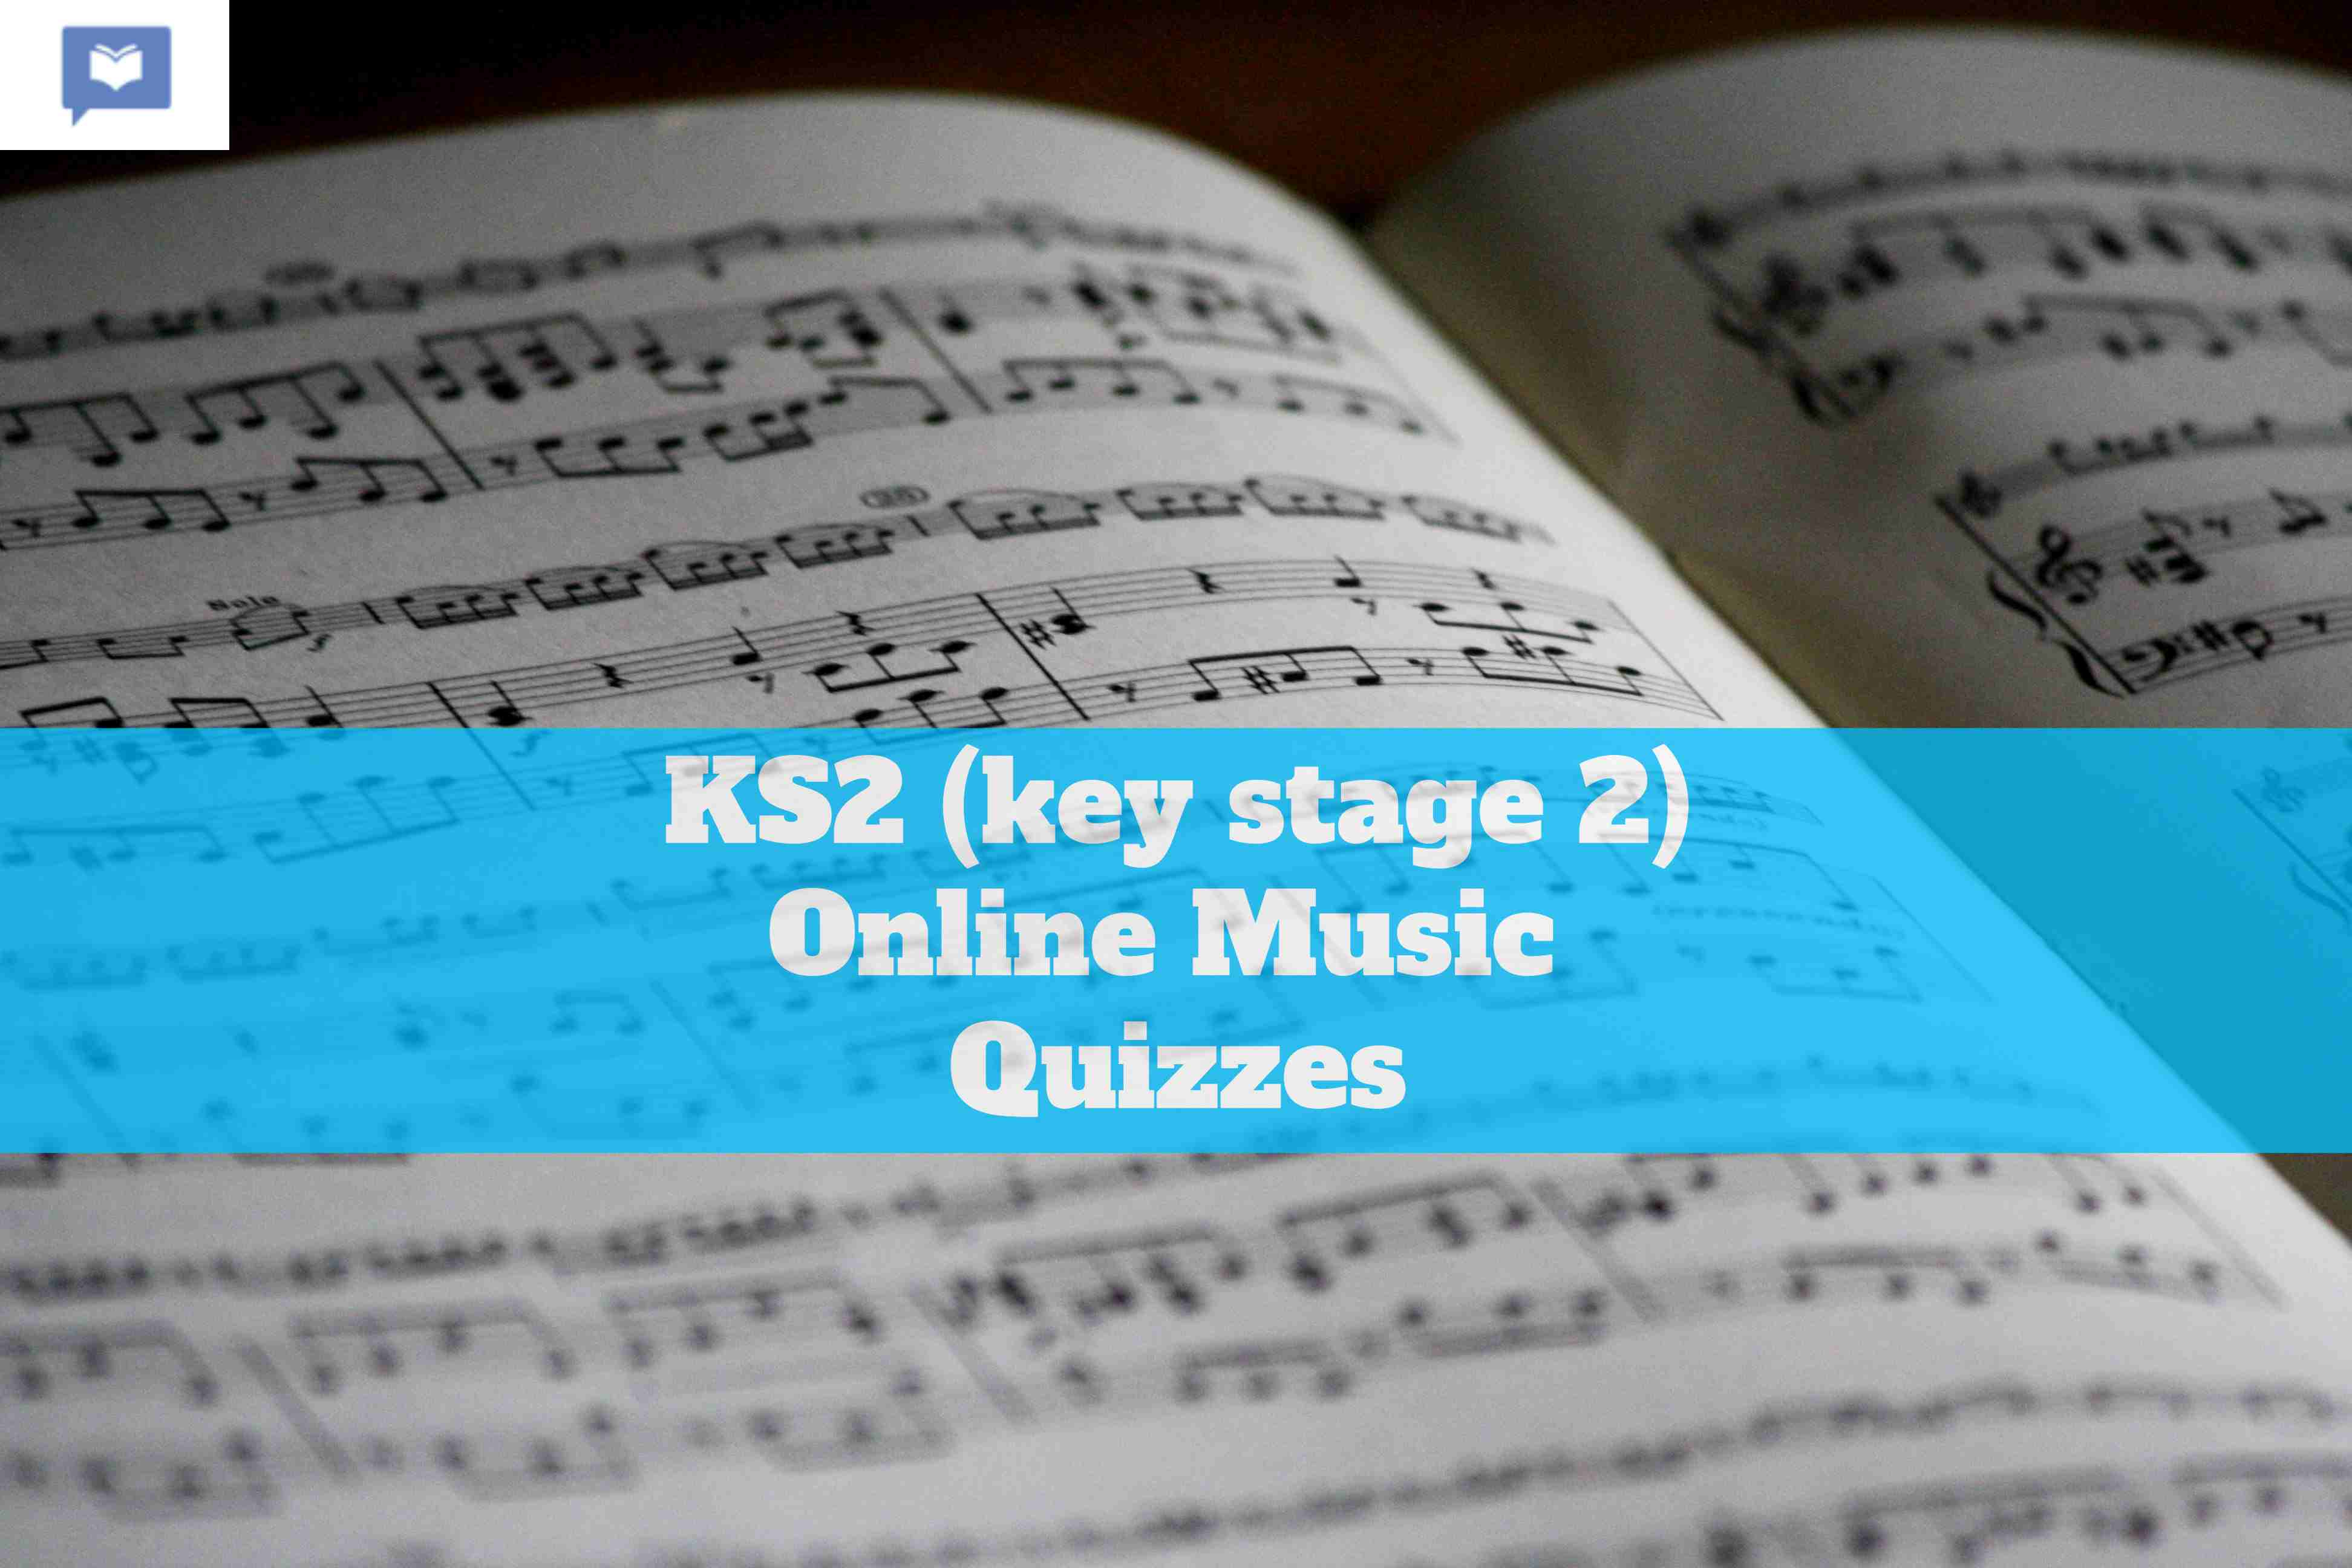  KS2 (key stage 2) Online Music Quizzes